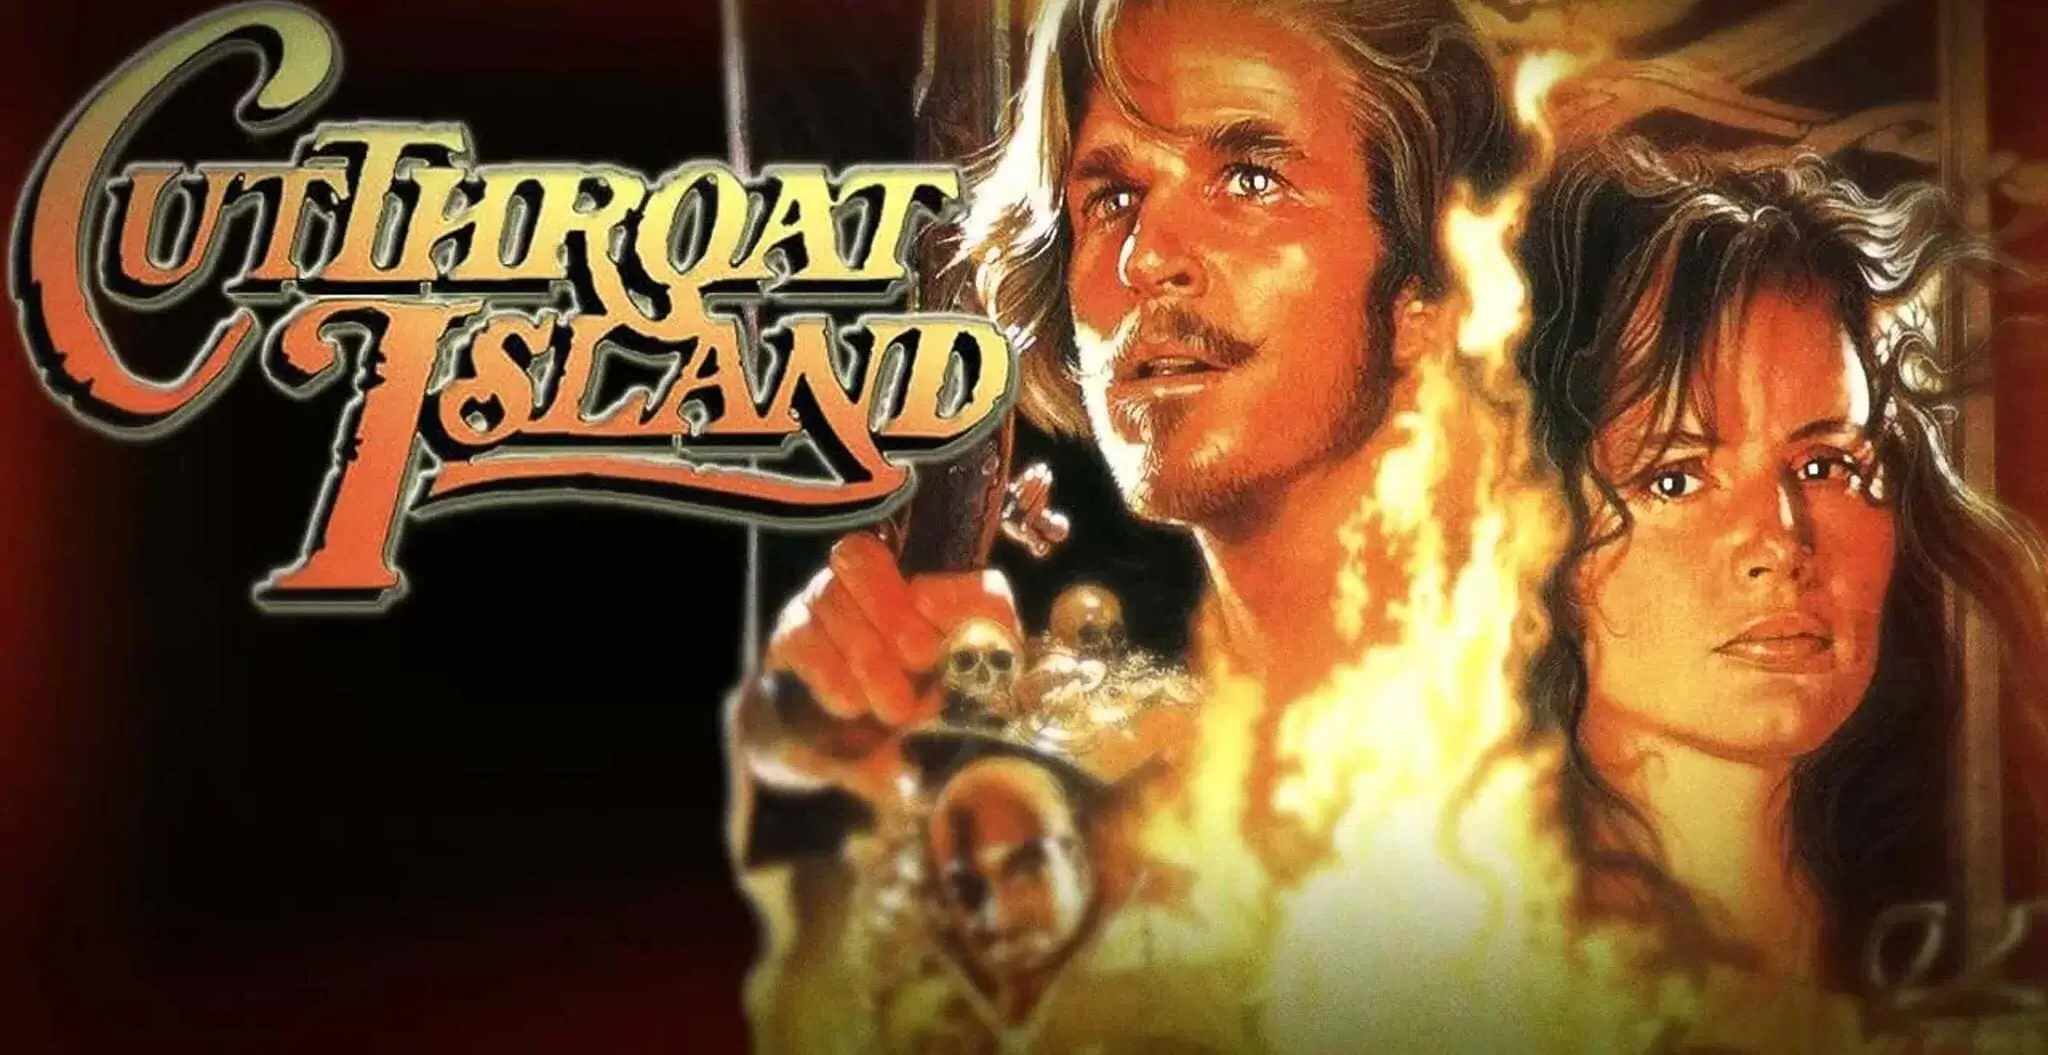 Cutthroat Island 4K 1995 big poster